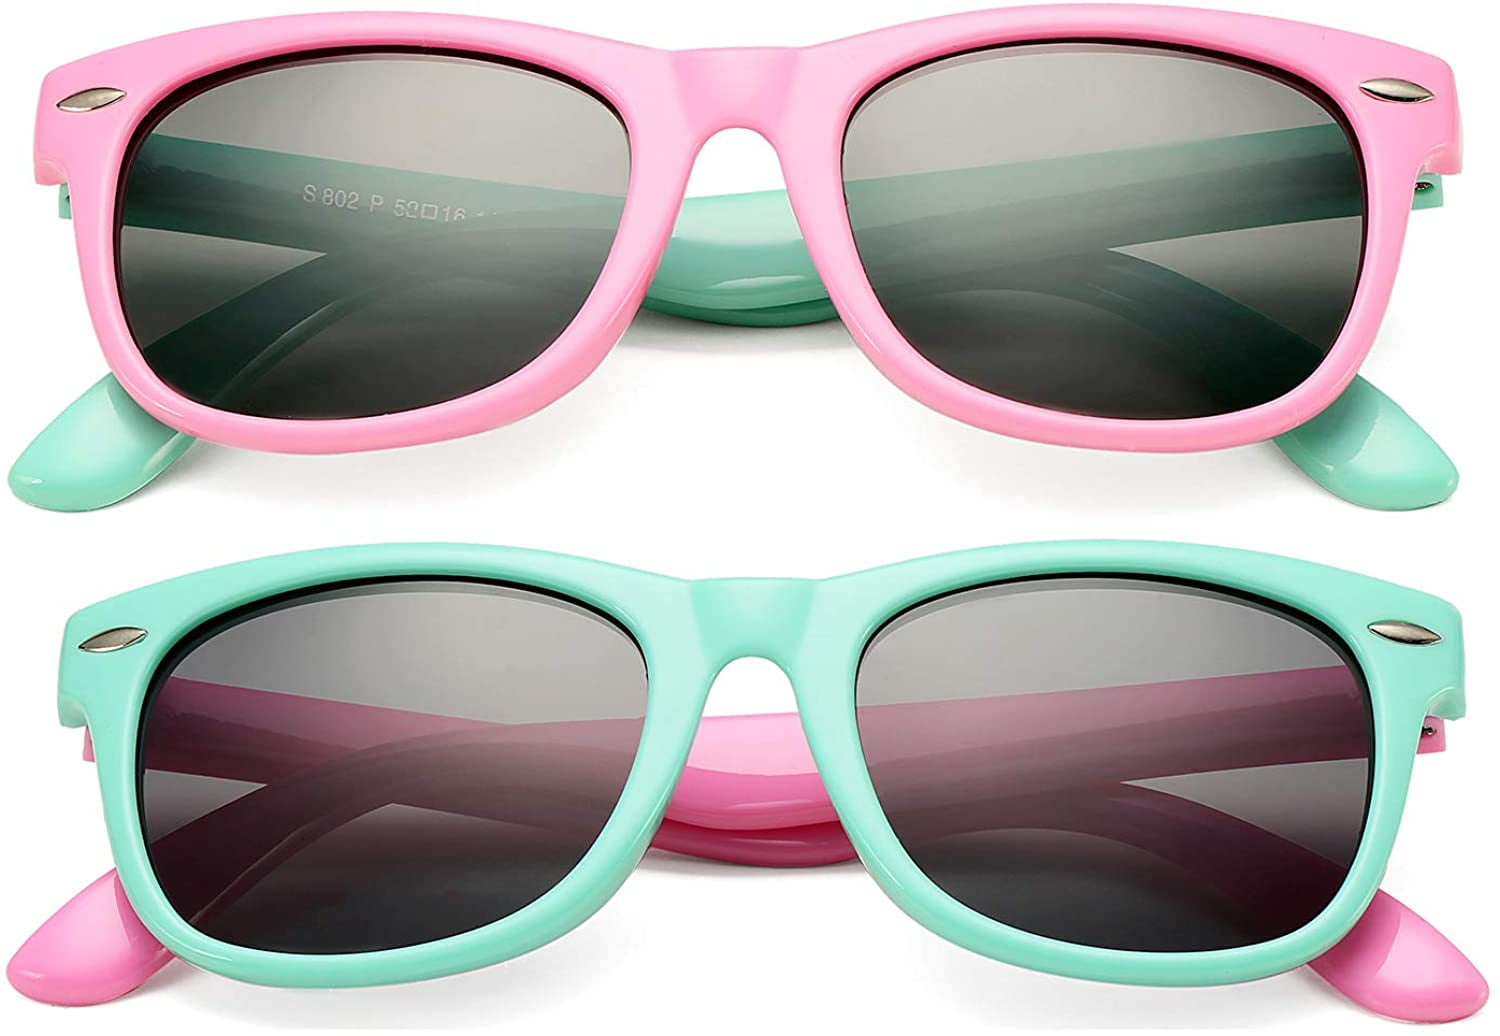 Kids Polarized Sunglasses for Boys Girls TPEE Rubber Flexible Frame Shades Age 3-12 